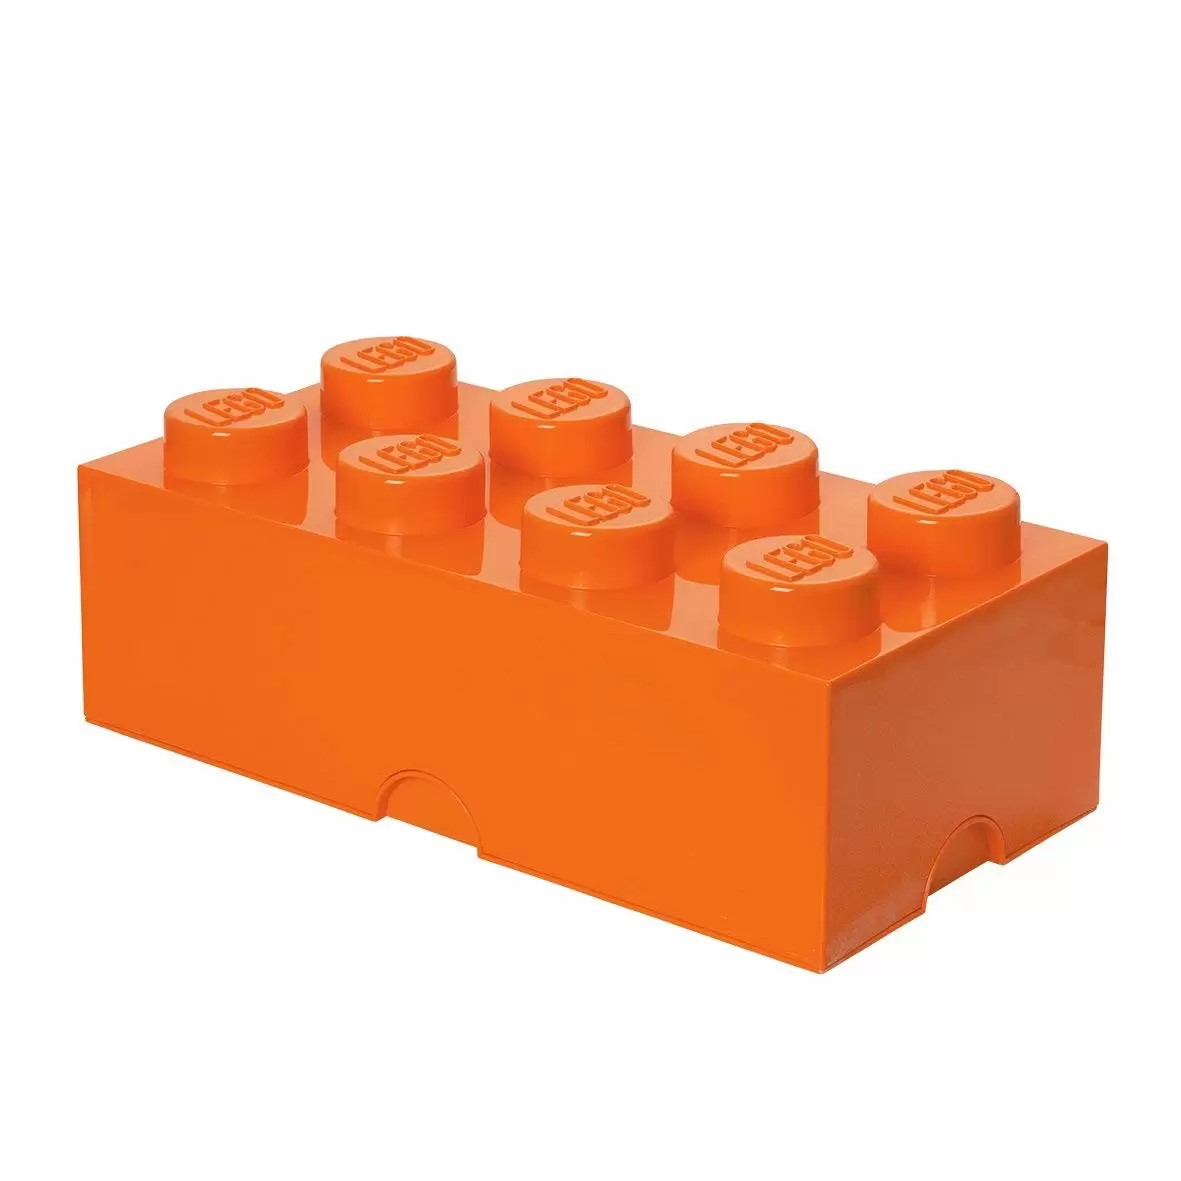 LEGO Storages - LEGO Storage Brick 8 - Bright Orange